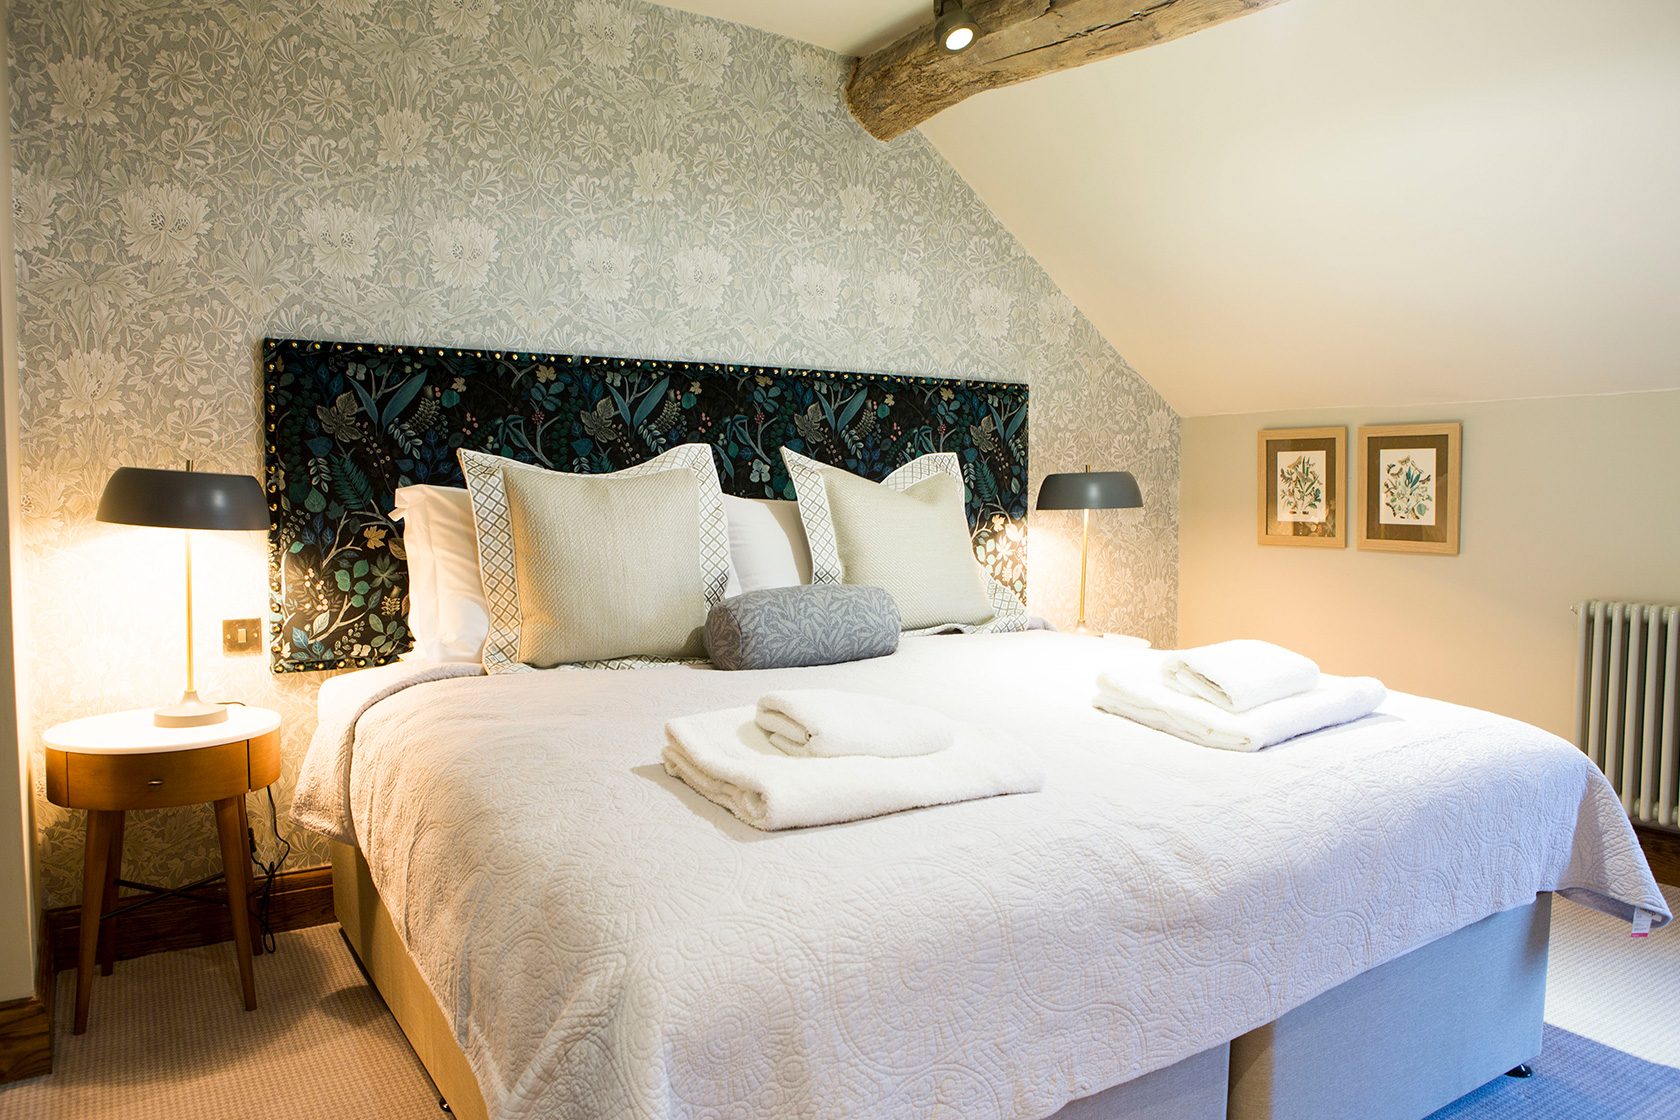 Newly-refurbished bedrooms close to Prestbury golf course in Prestbury village